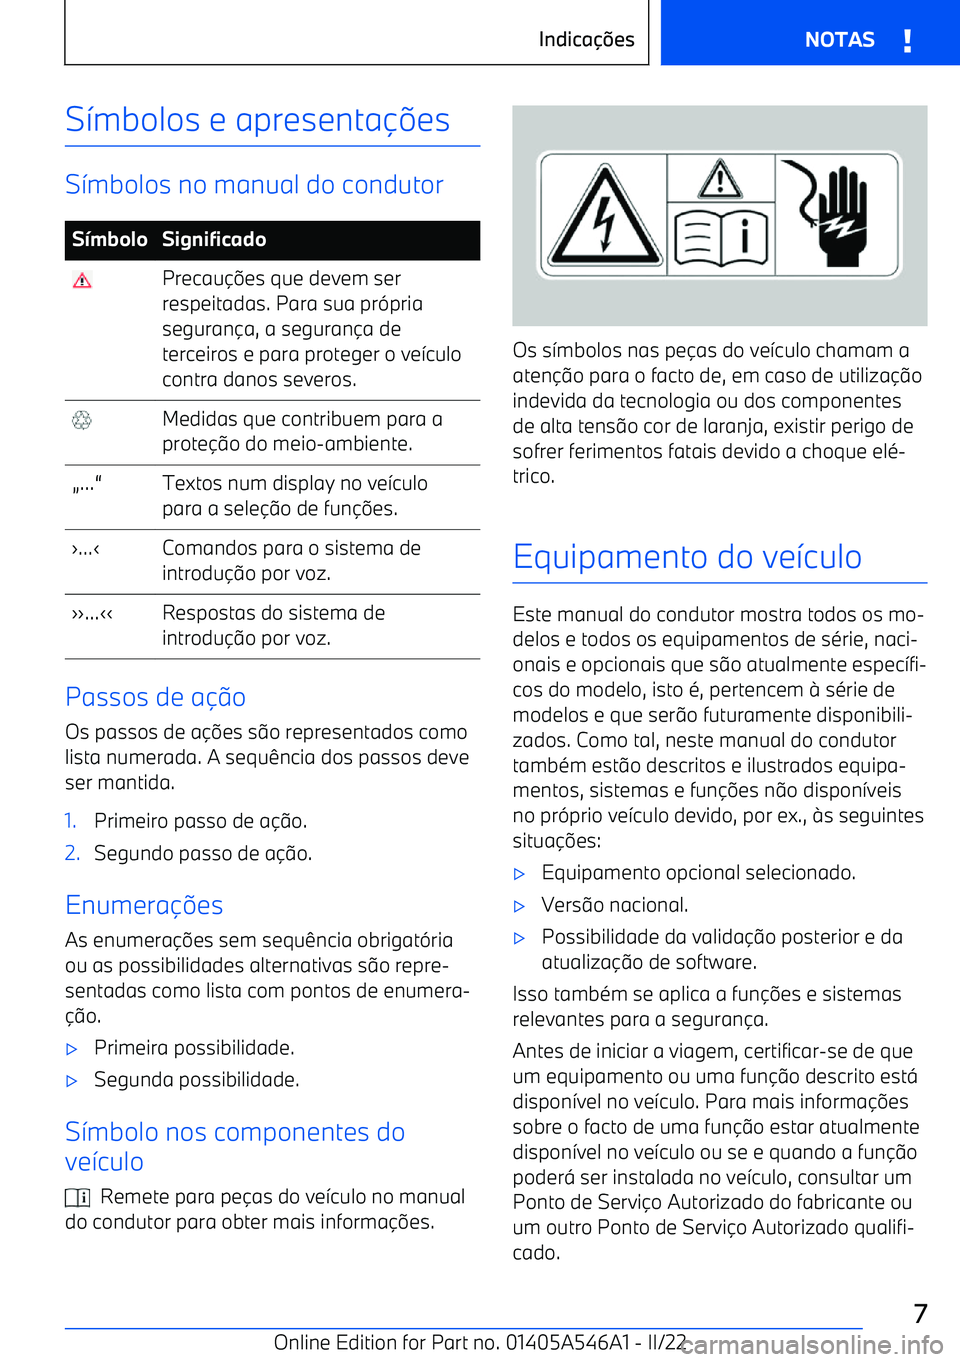 BMW I4 2022  Manual do condutor (in Portuguese) S